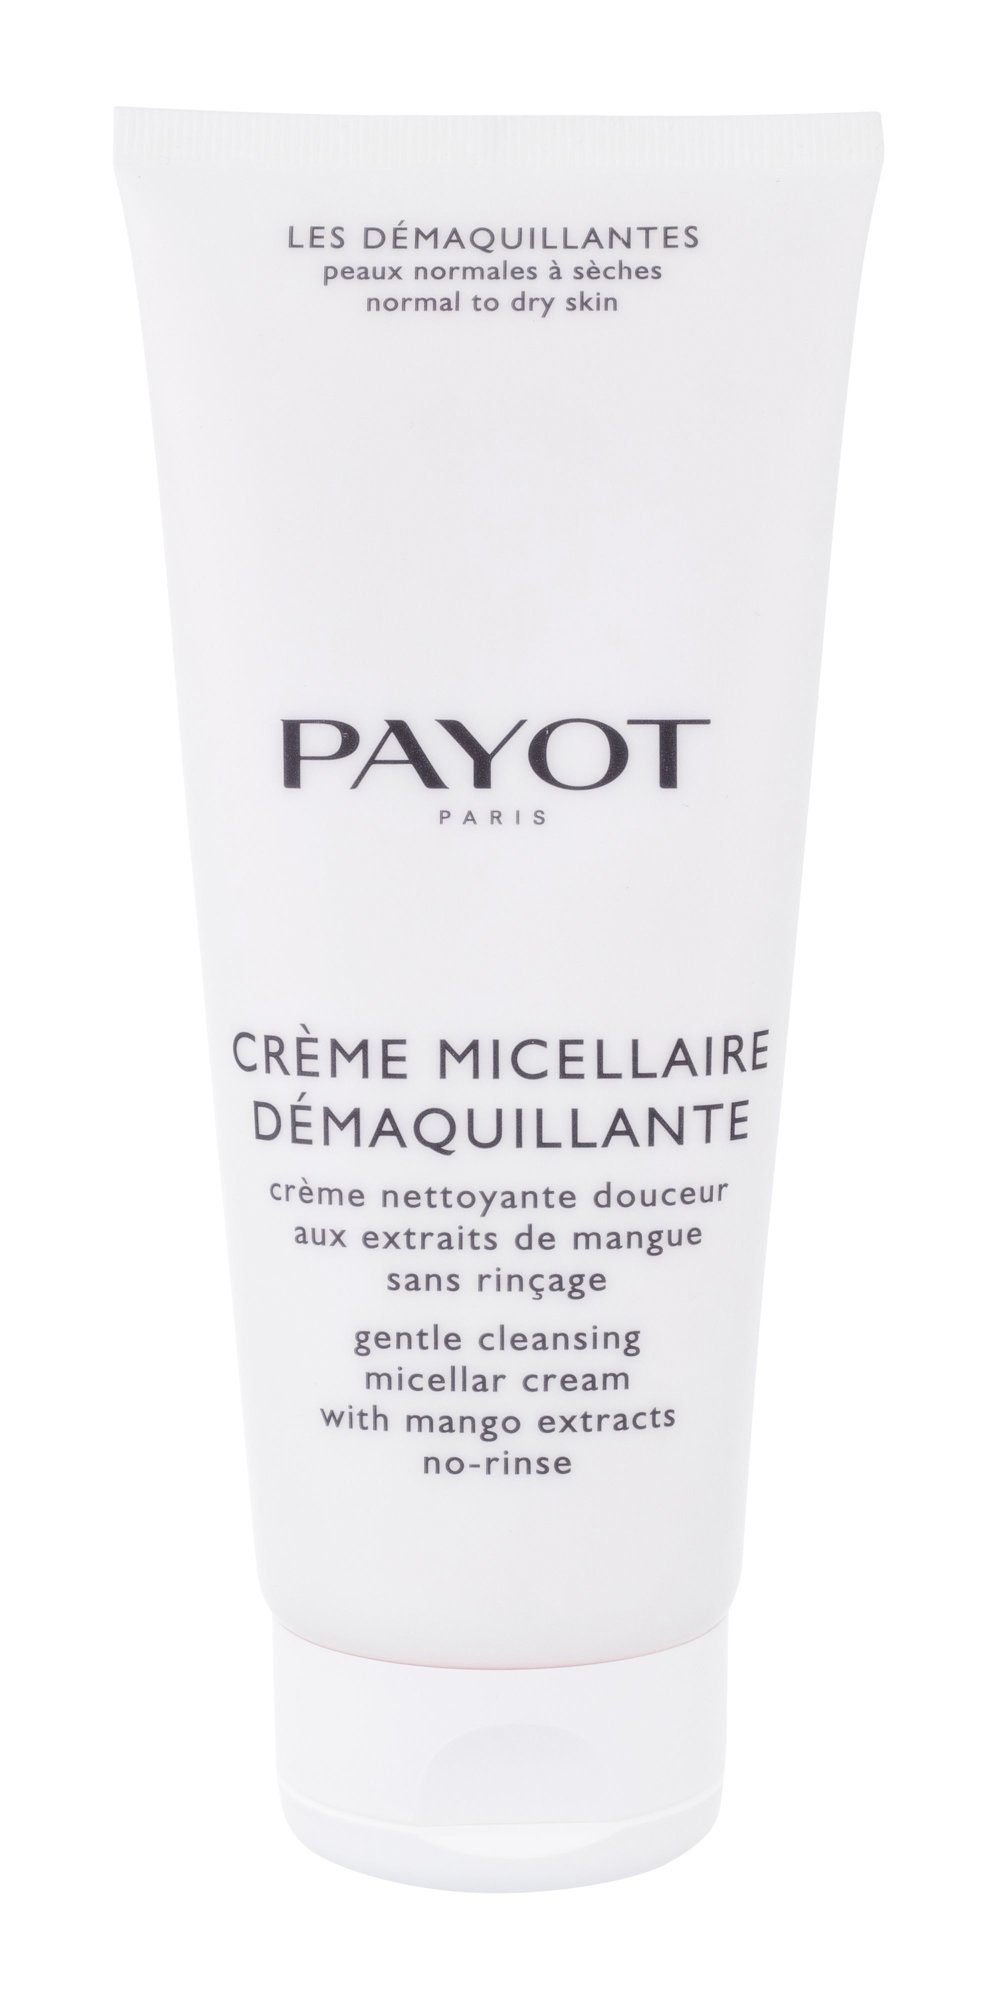 Payot Les Démaquillantes Gentle Cleansing Micellar Cream veido kremas